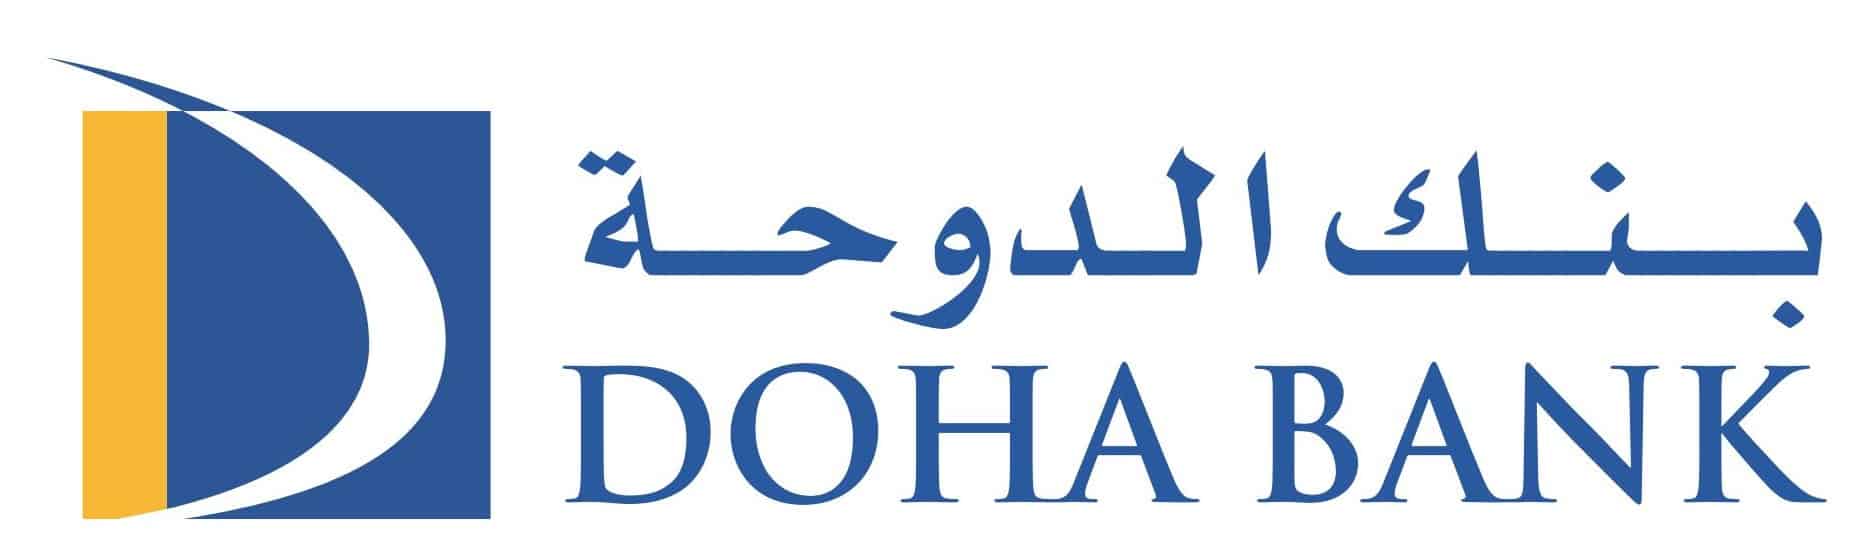 doha bank logo